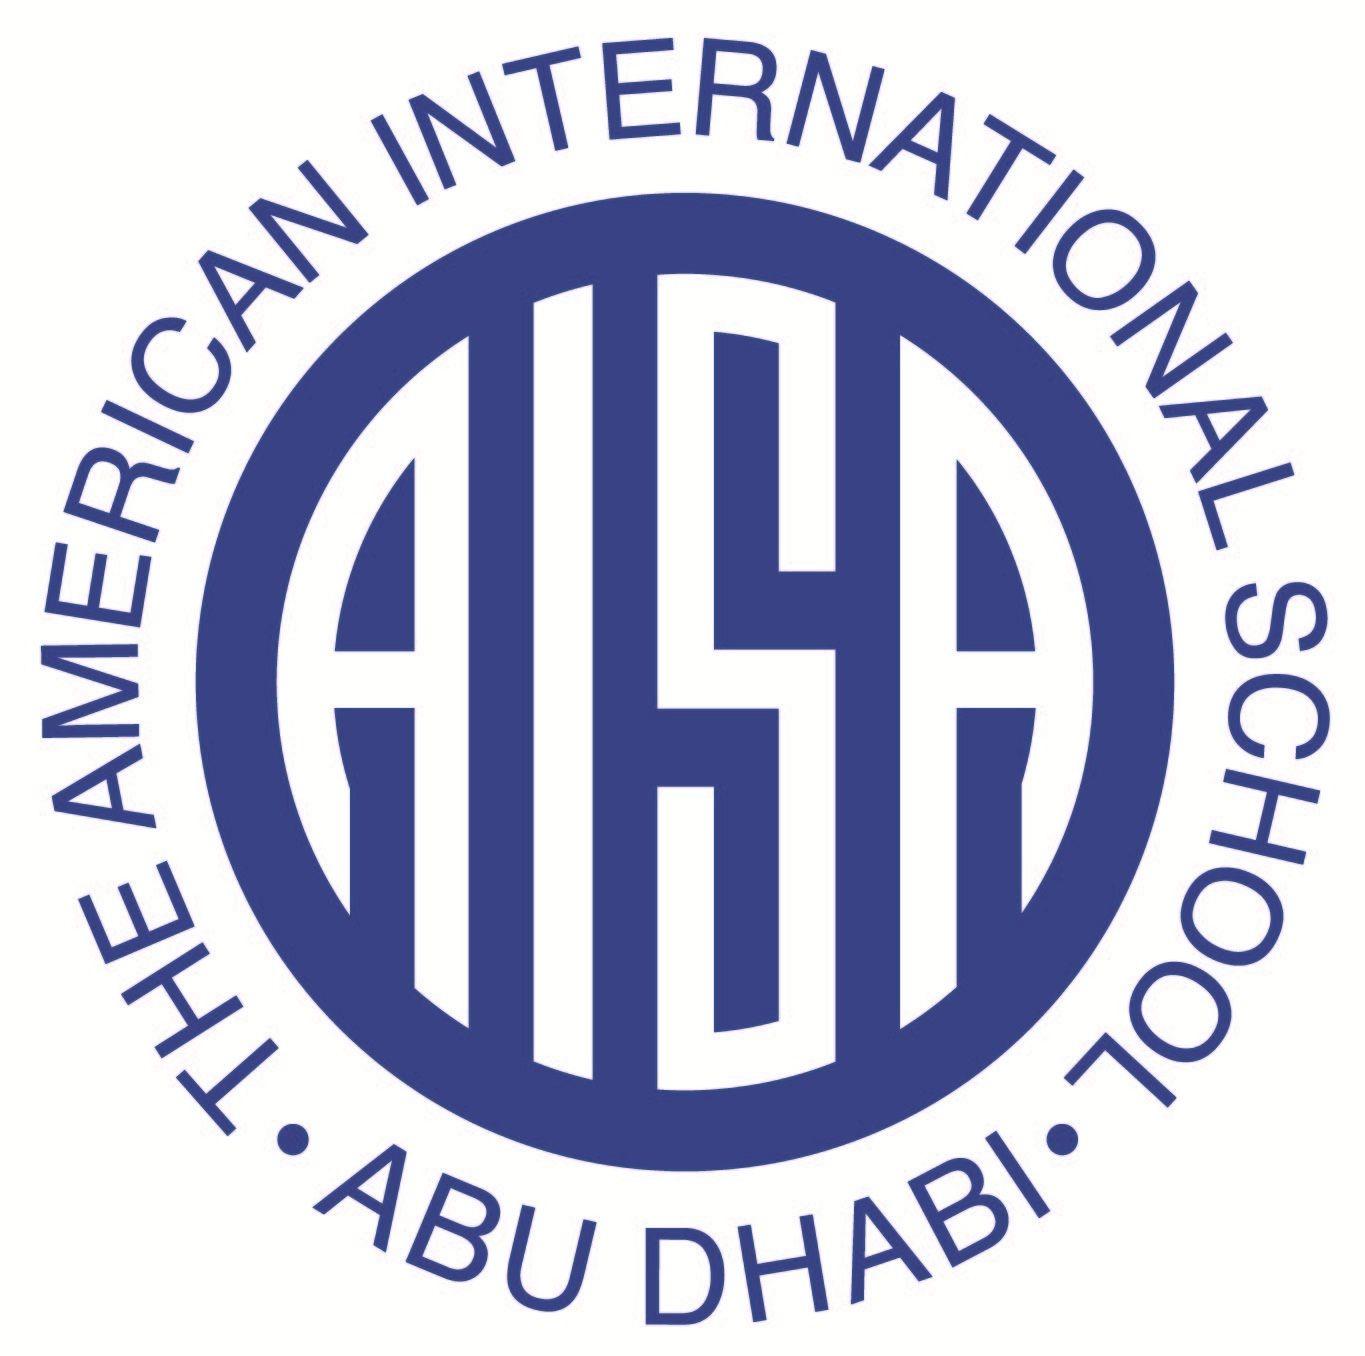 Aisa Logo - AISA